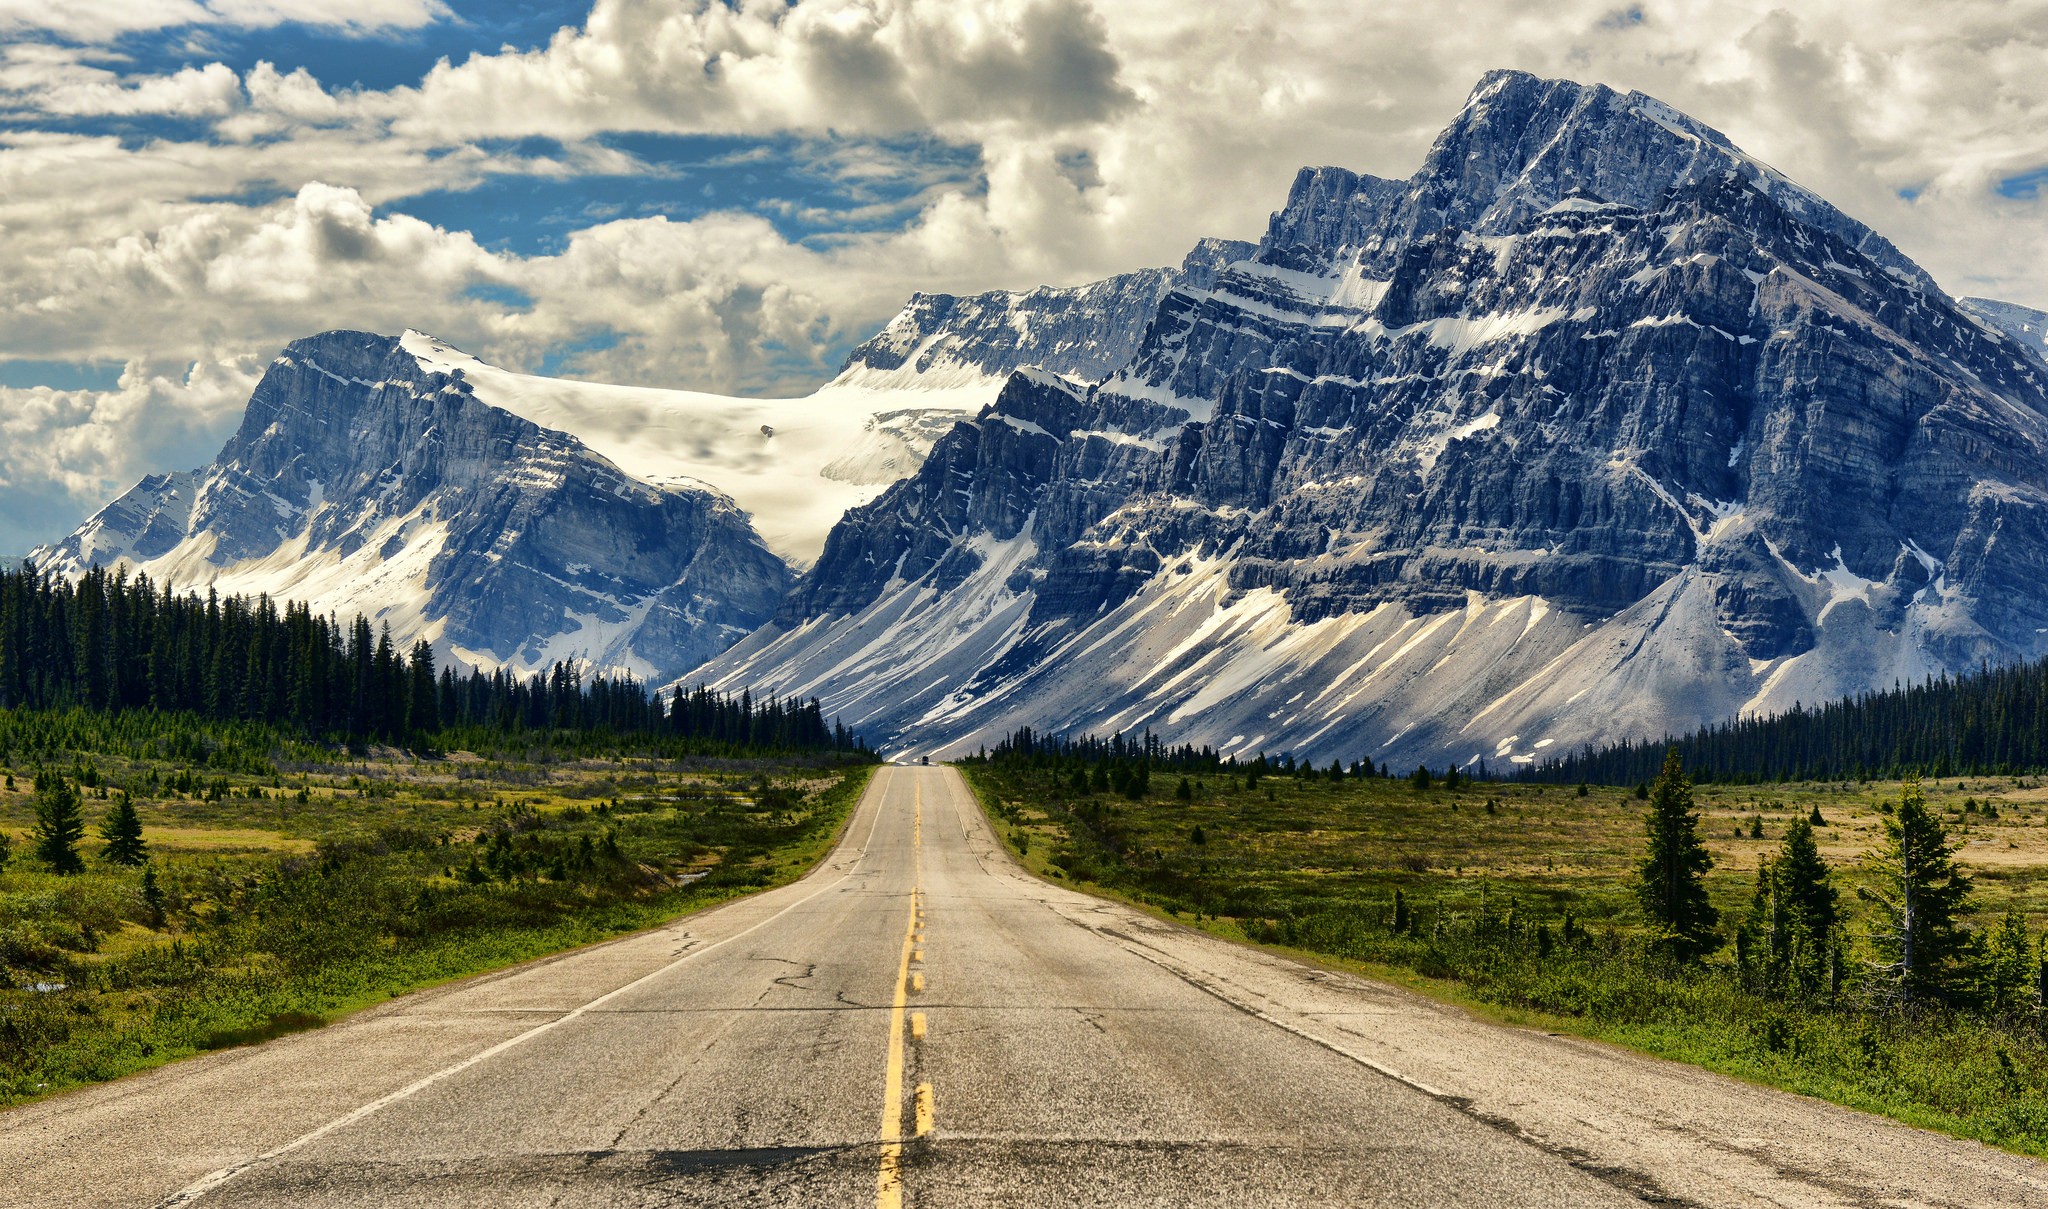 General 2048x1209 road mountains landscape nature snowy mountain Banff National Park Canada asphalt